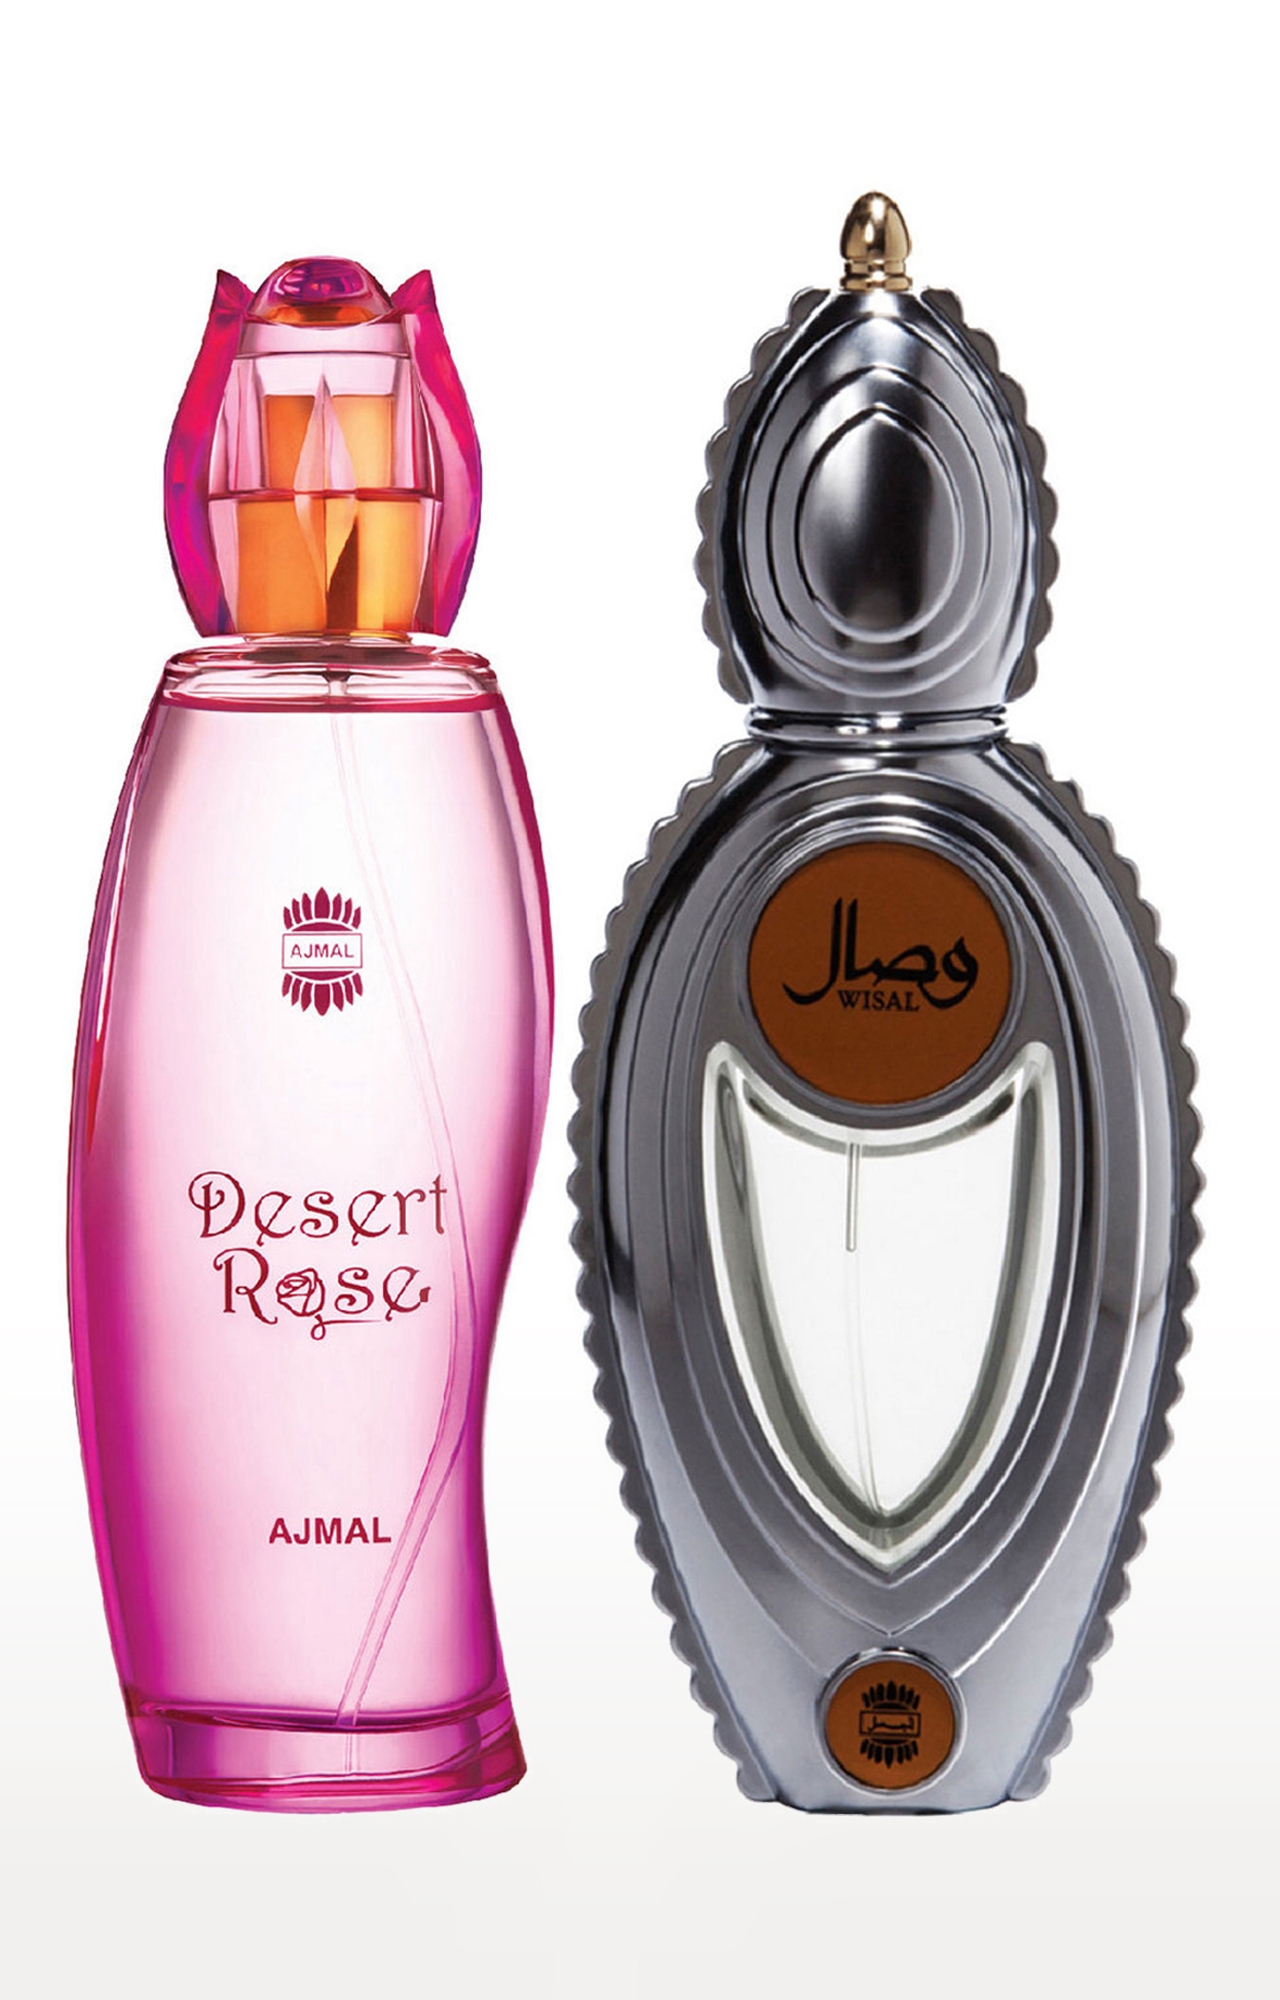 Ajmal | Ajmal Desert Rose Edp Floral Oriental Perfume 100Ml For Women And Wisal Edp Floral Musky Perfume 50Ml For Women